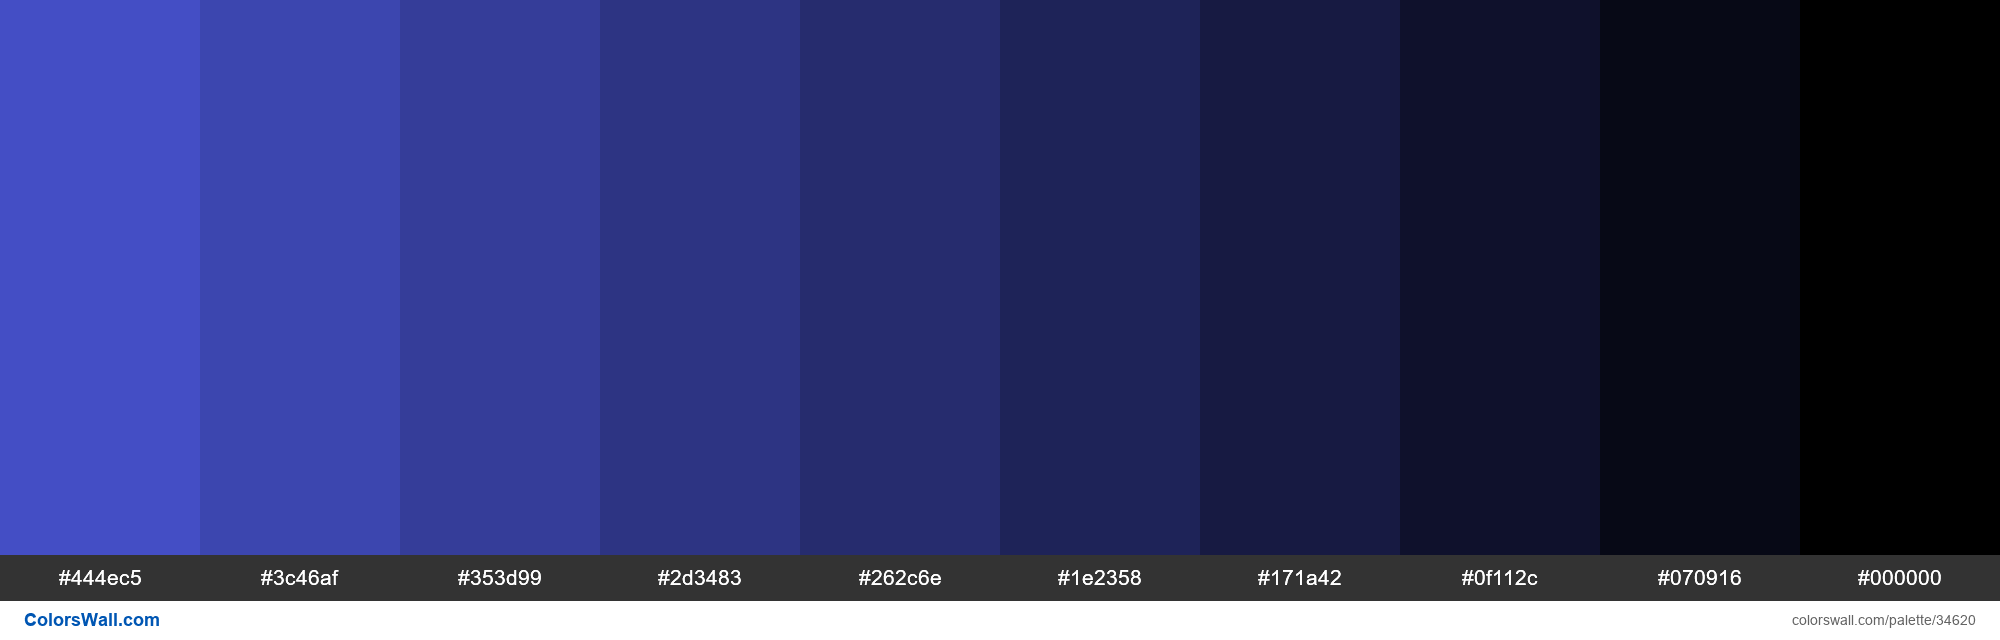 Shades XKCD Color warm blue #4b57db hex colors palette - ColorsWall